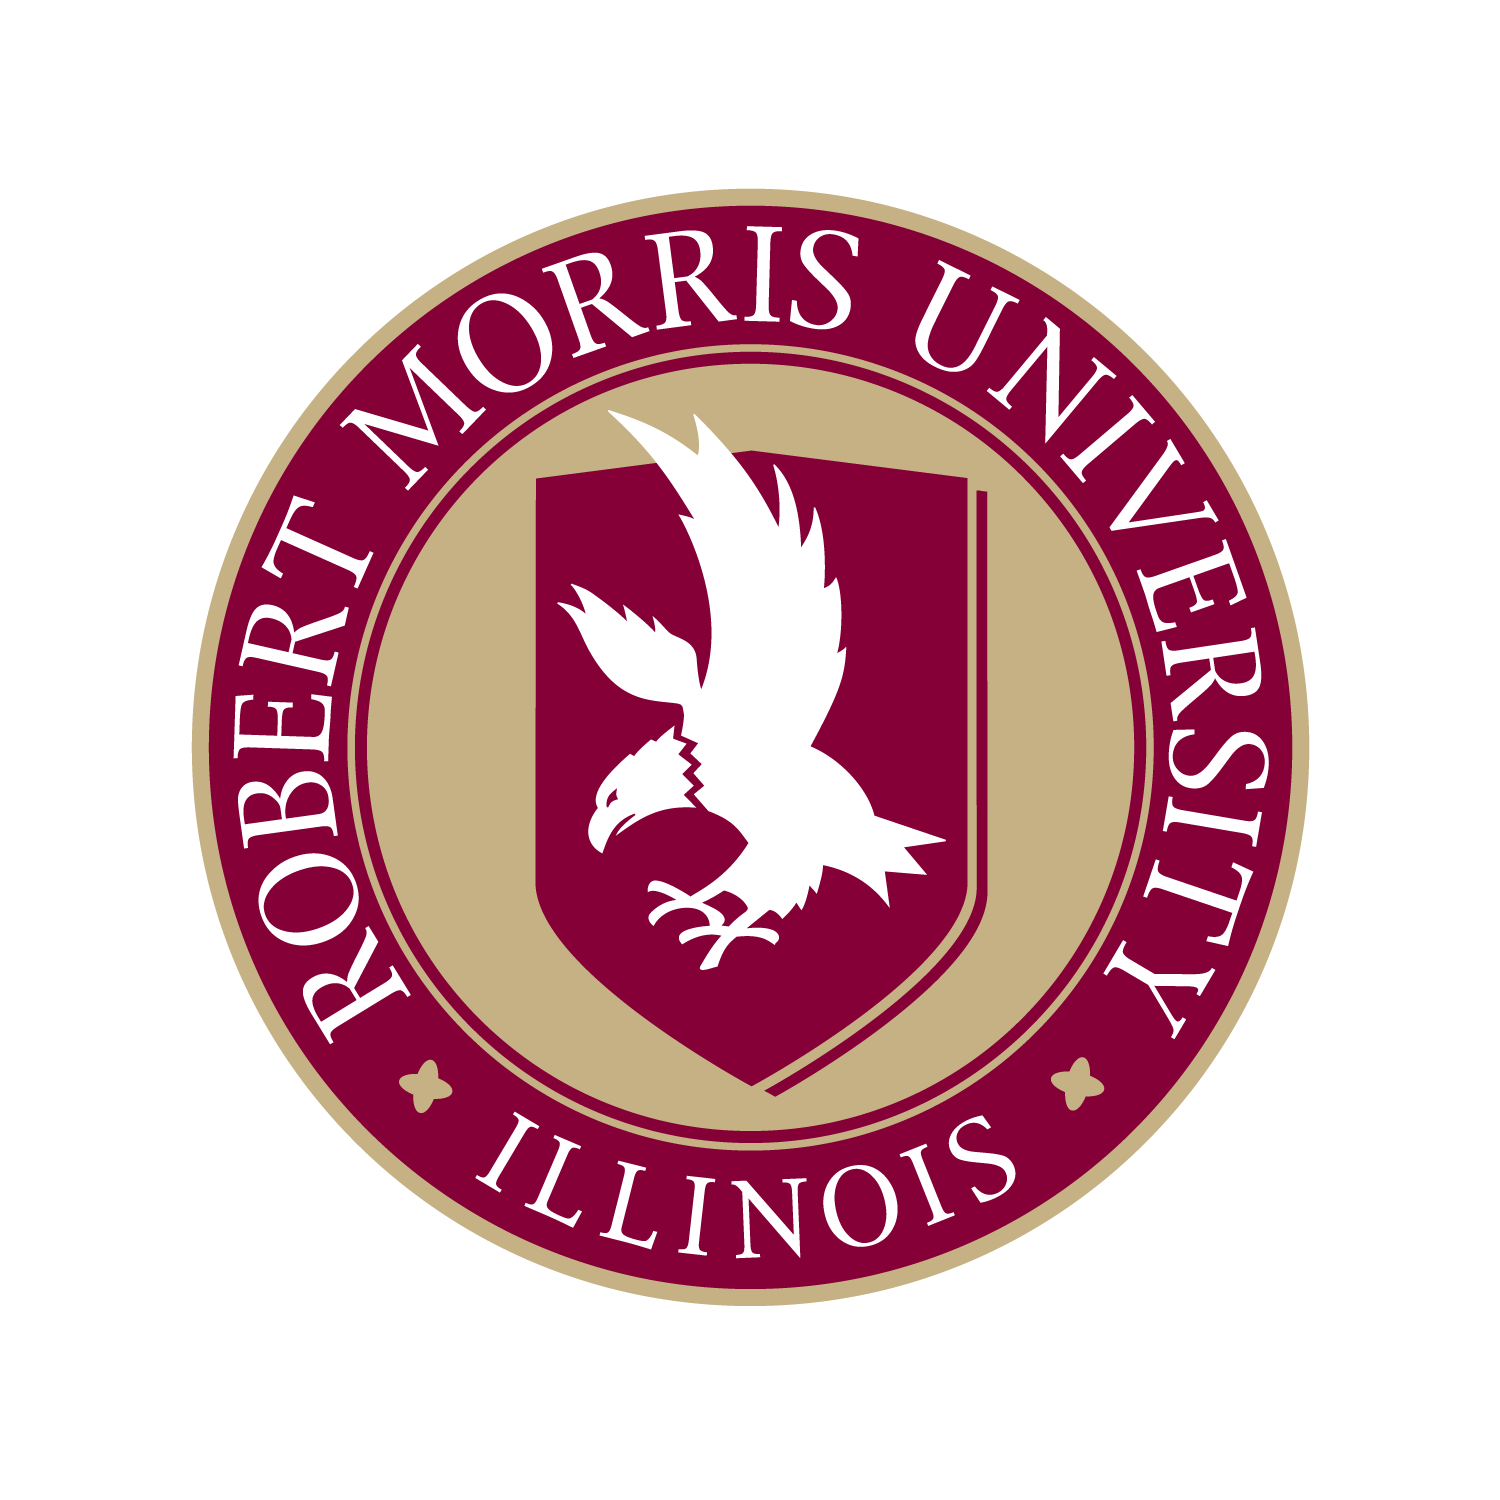 Illinois State Football Logo - Experience Makes Experts | Robert Morris University Illinois